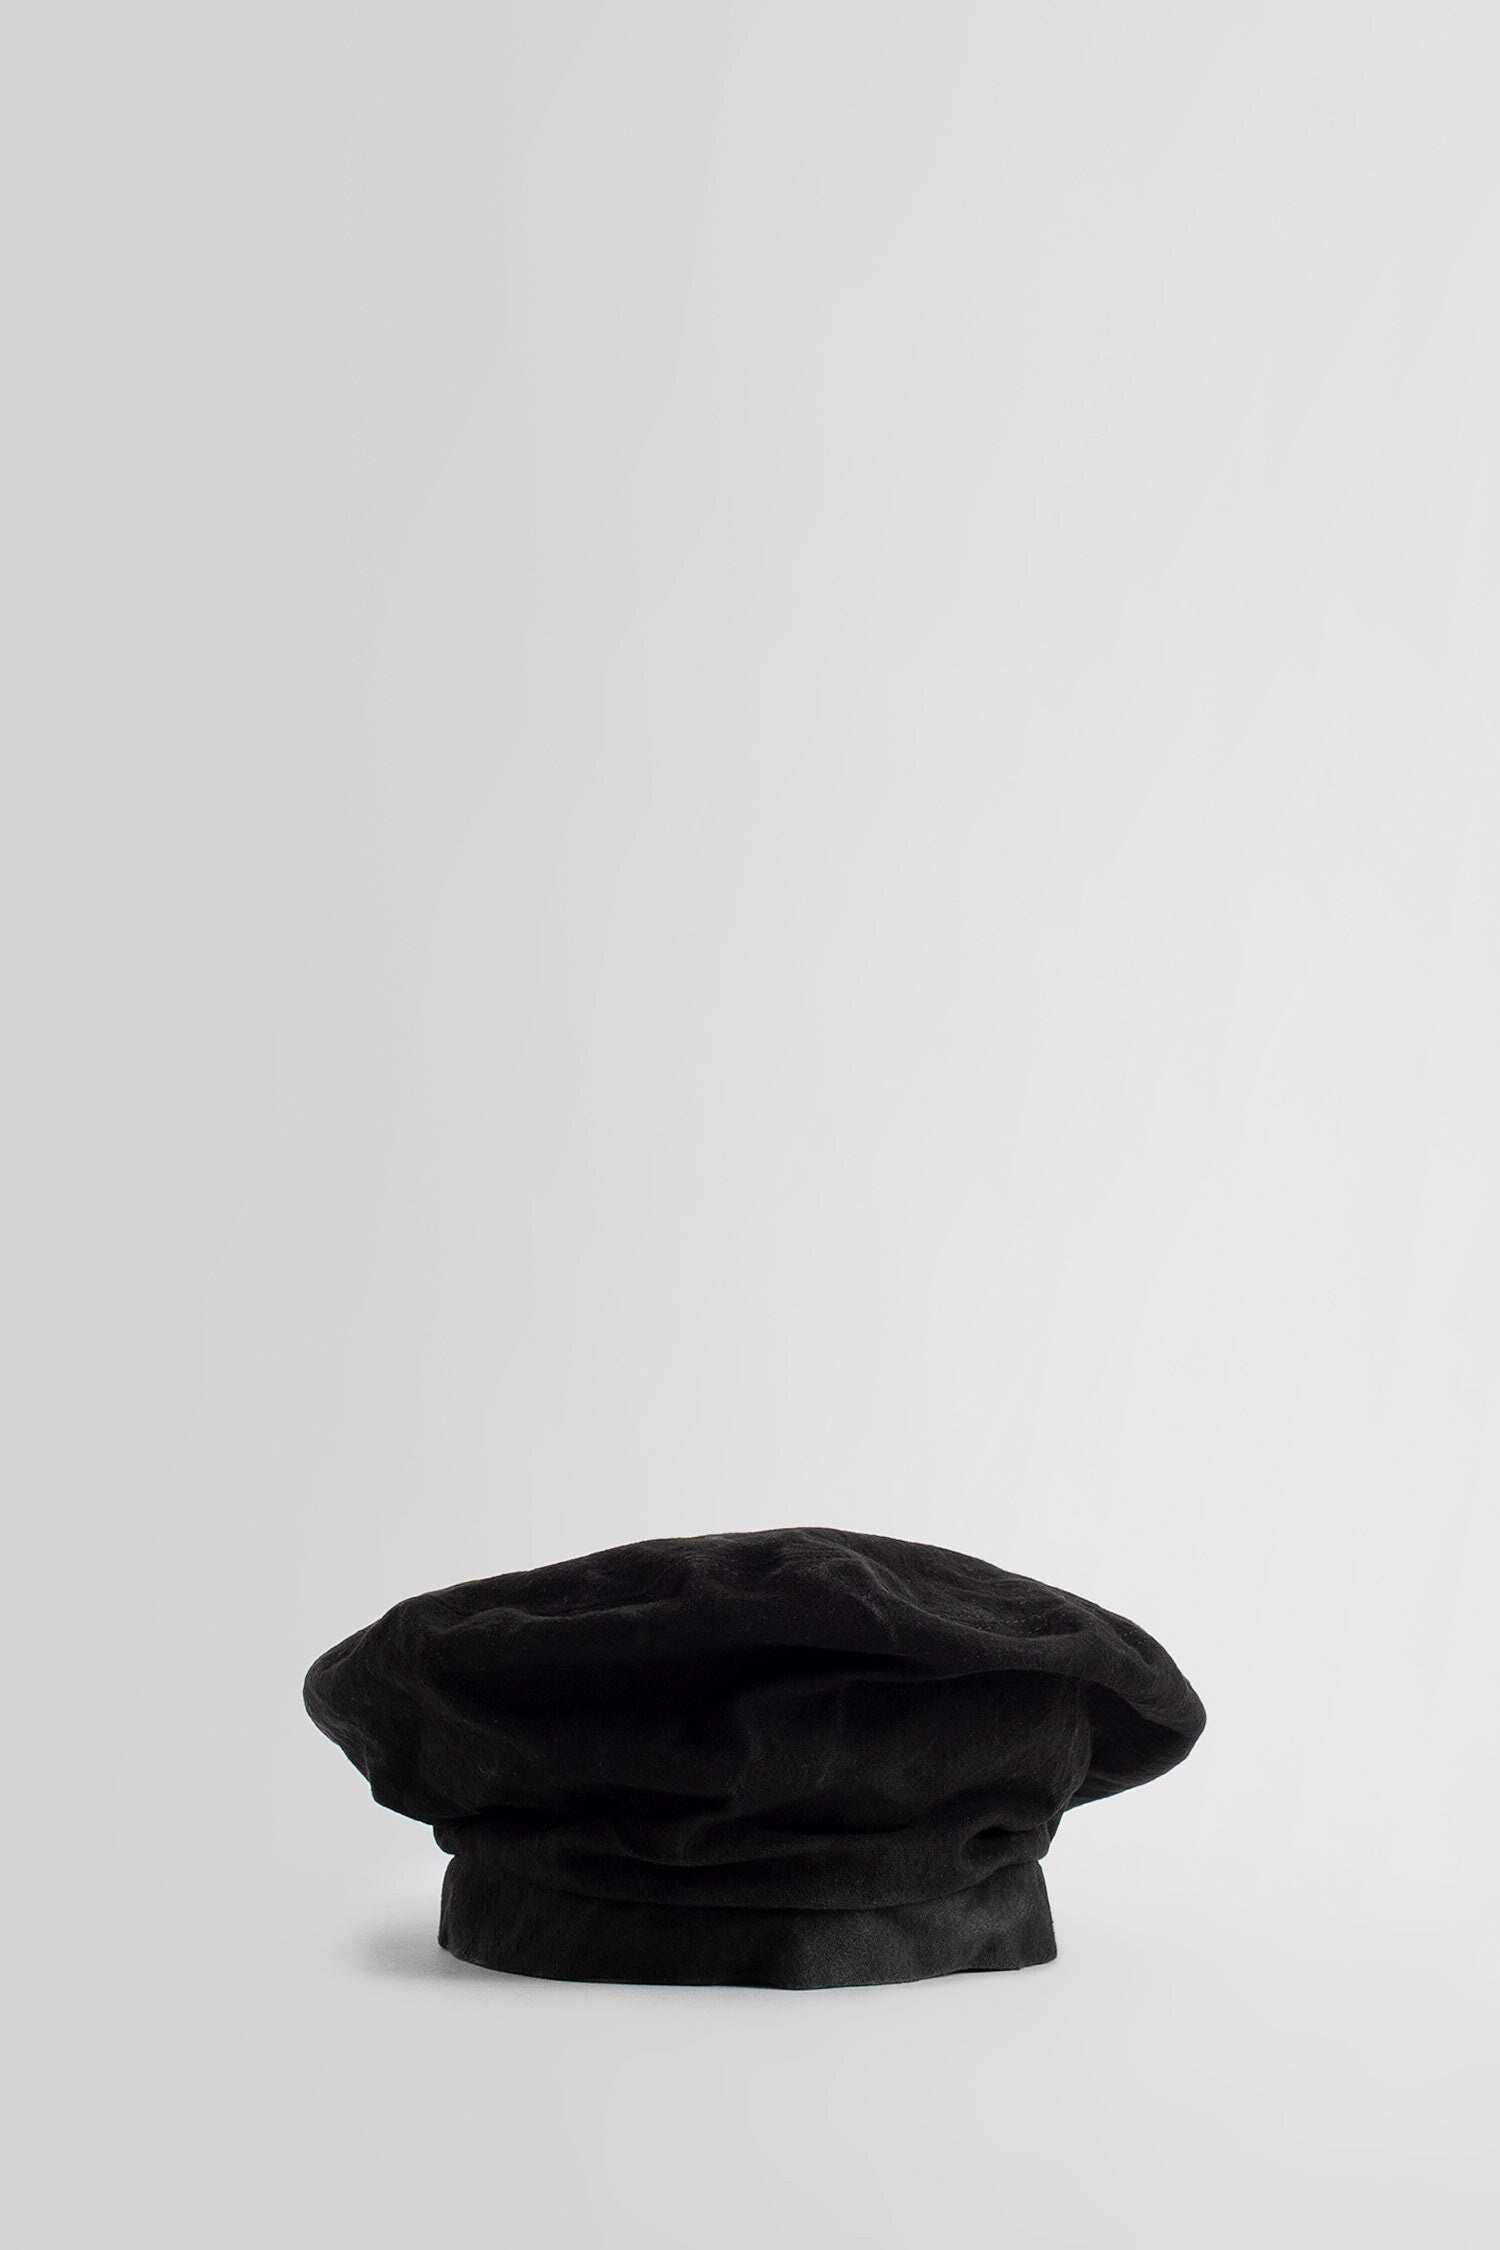 HORISAKI UNISEX BLACK HATS - 1